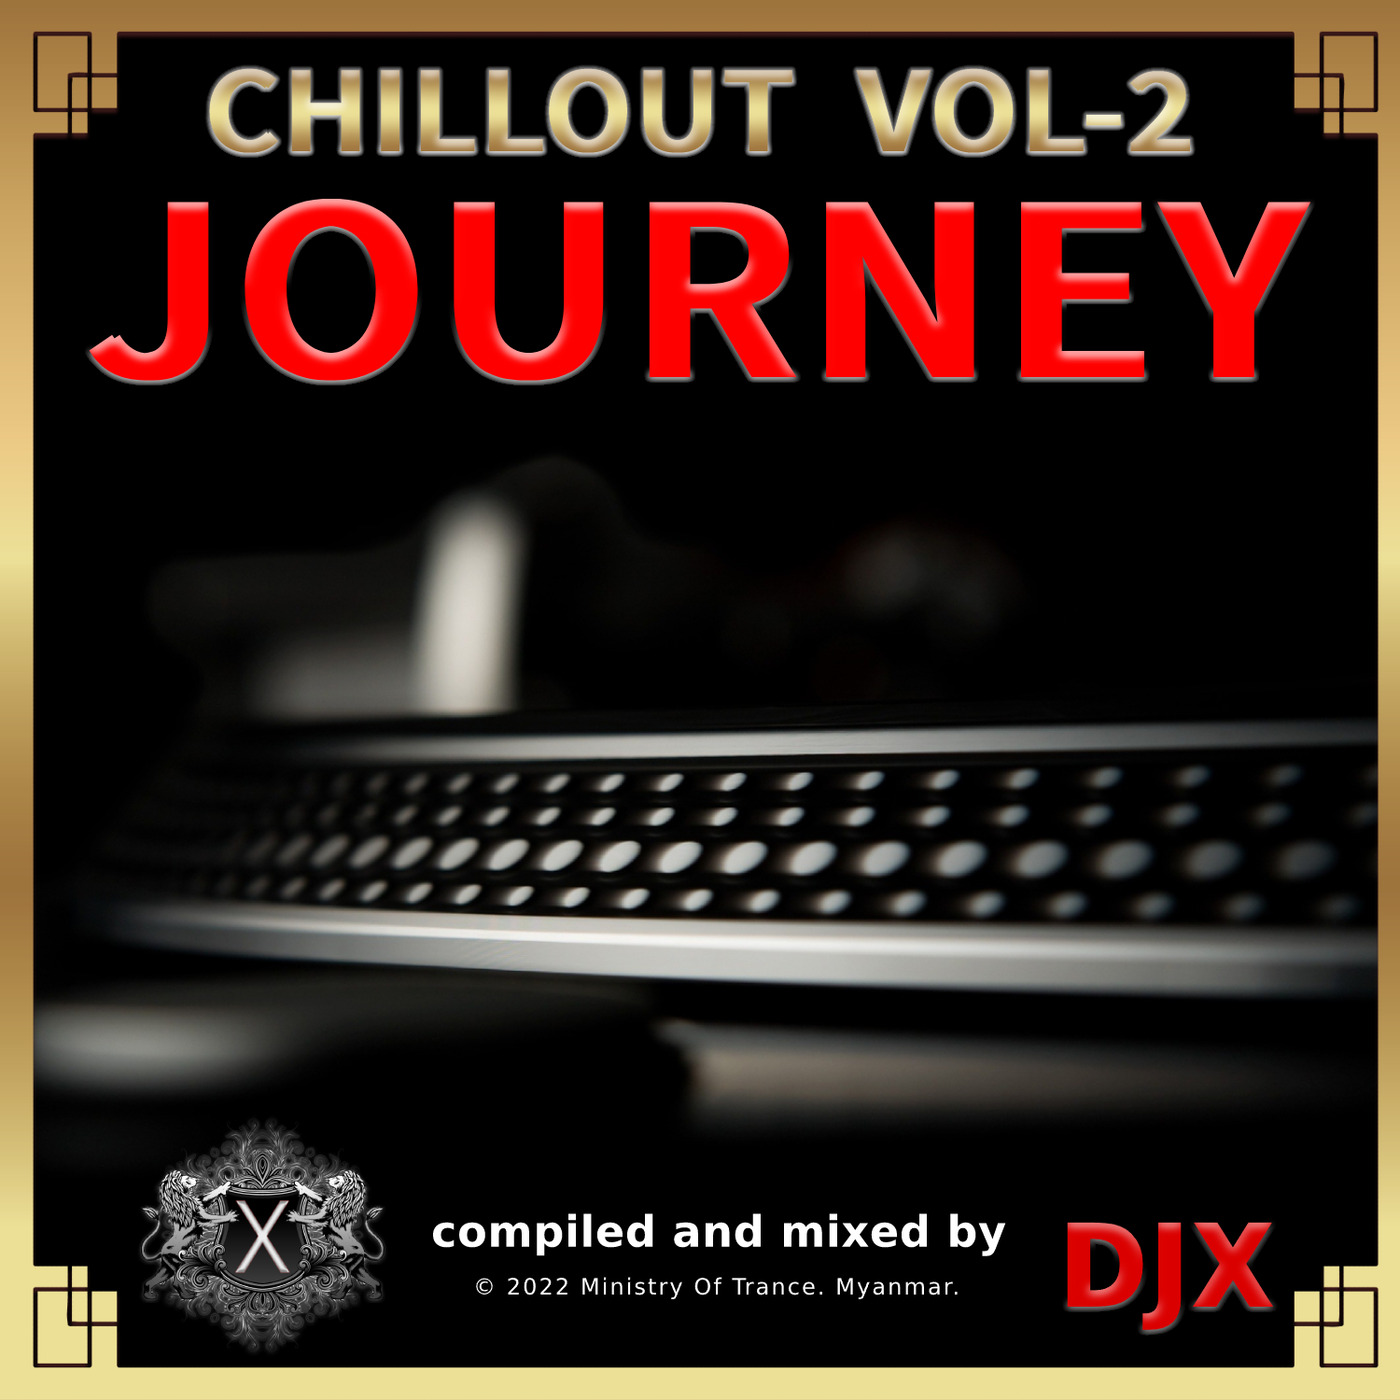 Chillout Journey Vol - 2